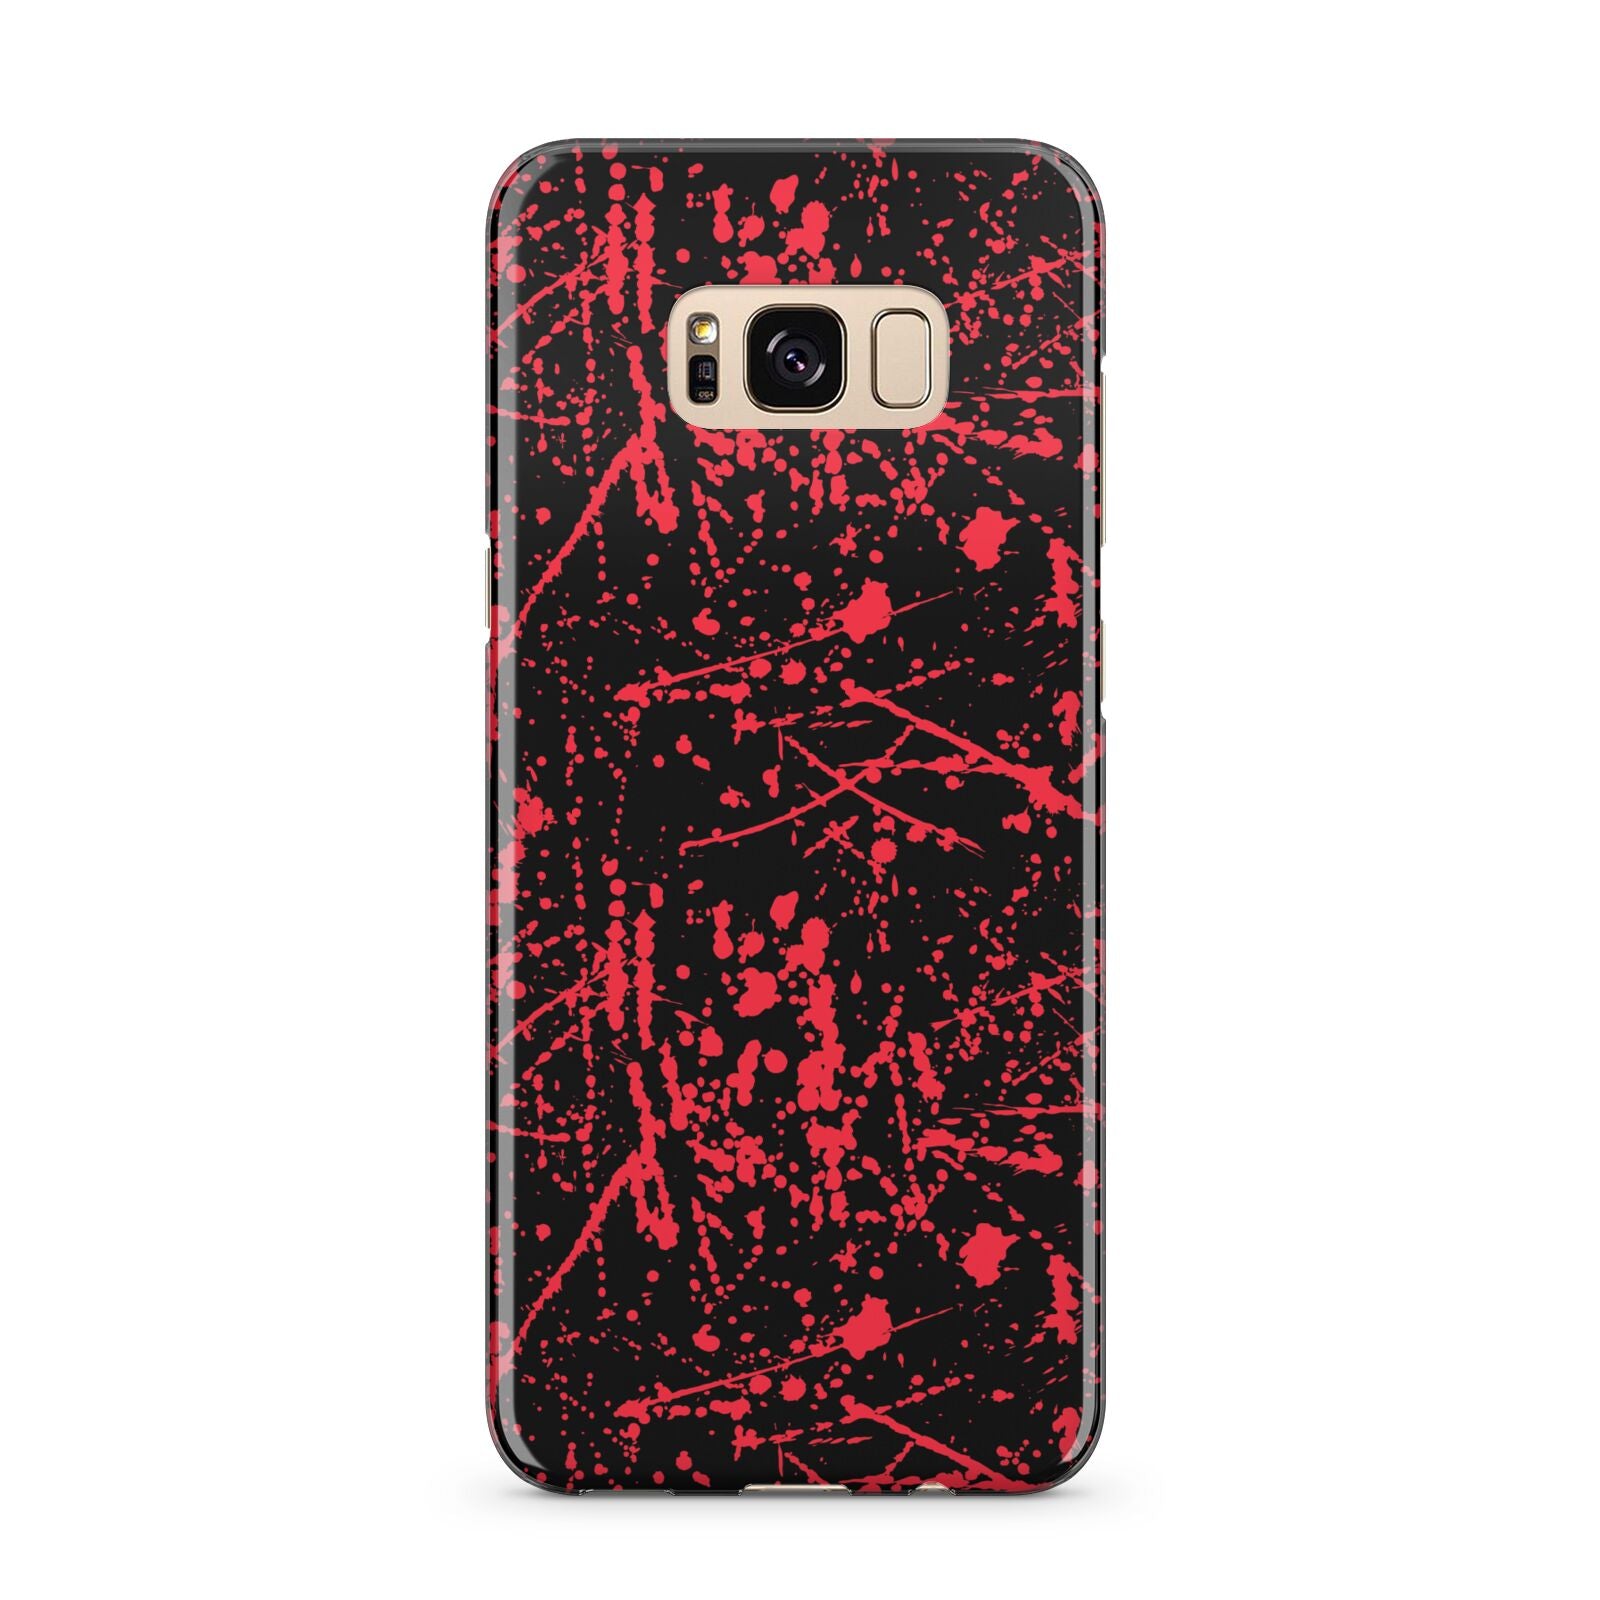 Blood Splatters Samsung Galaxy S8 Plus Case